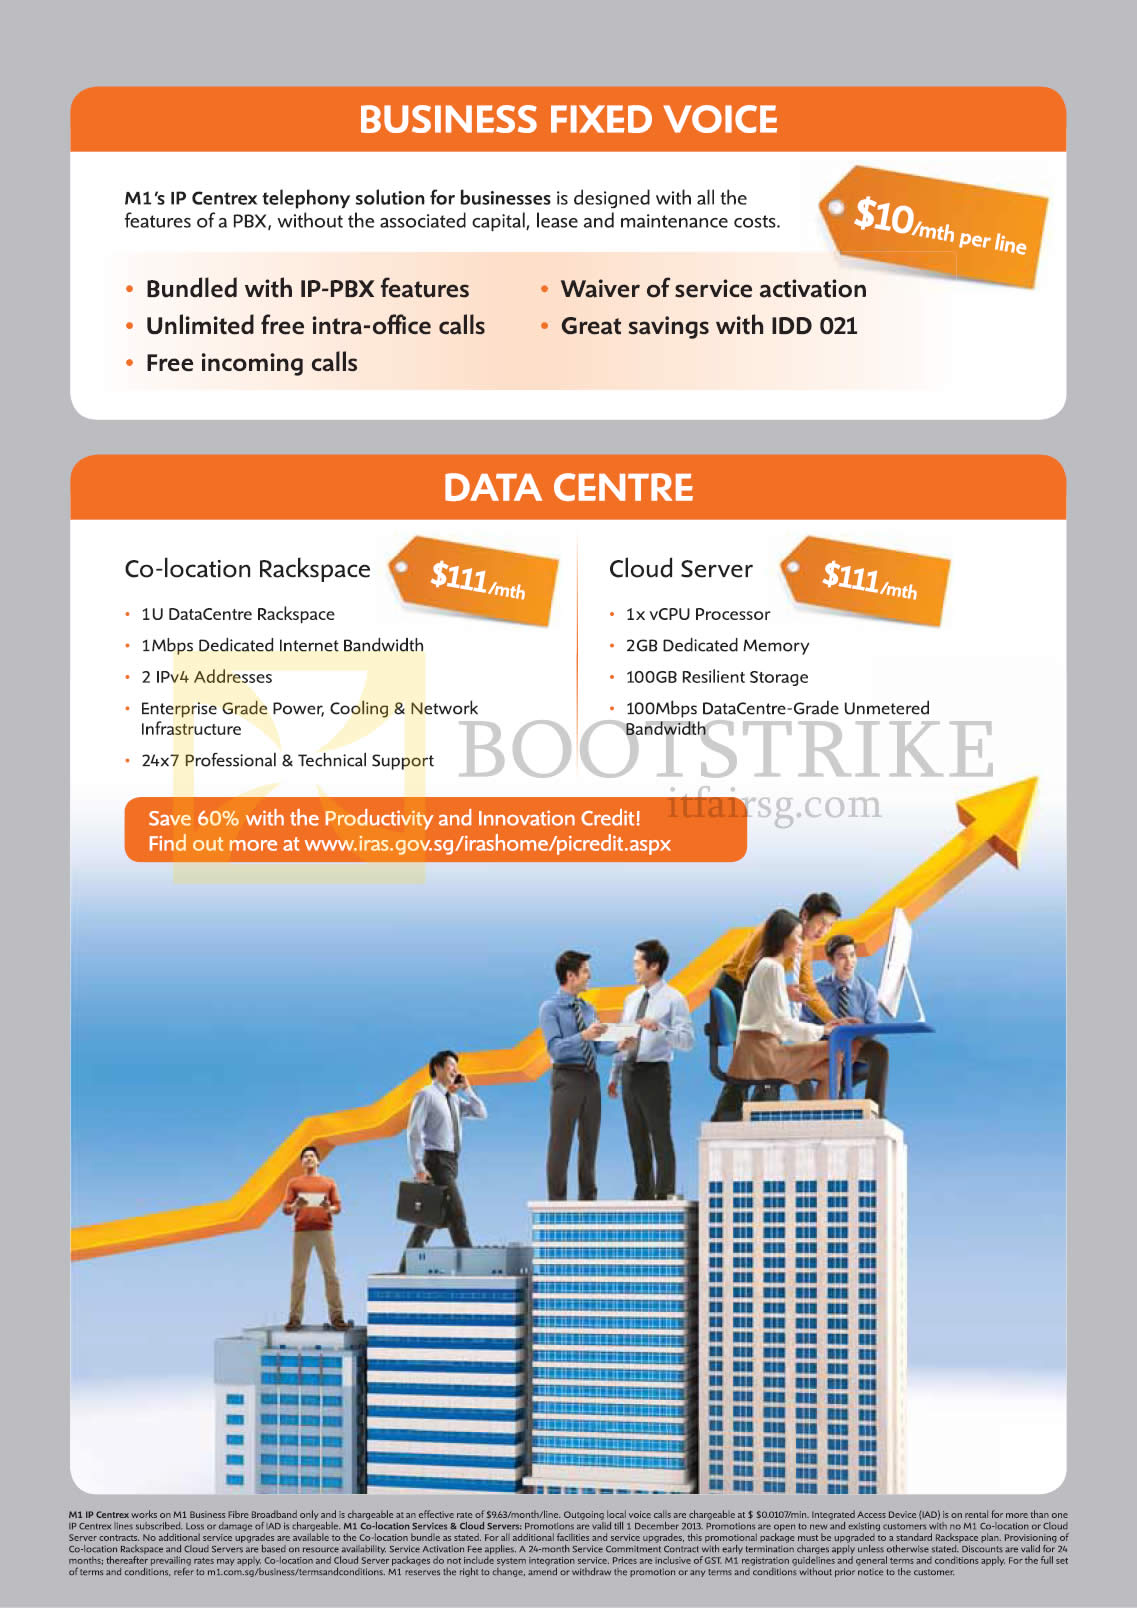 SITEX 2013 price list image brochure of M1 Business Fixed Voice, Data Centre, Co-Location Rackspace, Cloud Server